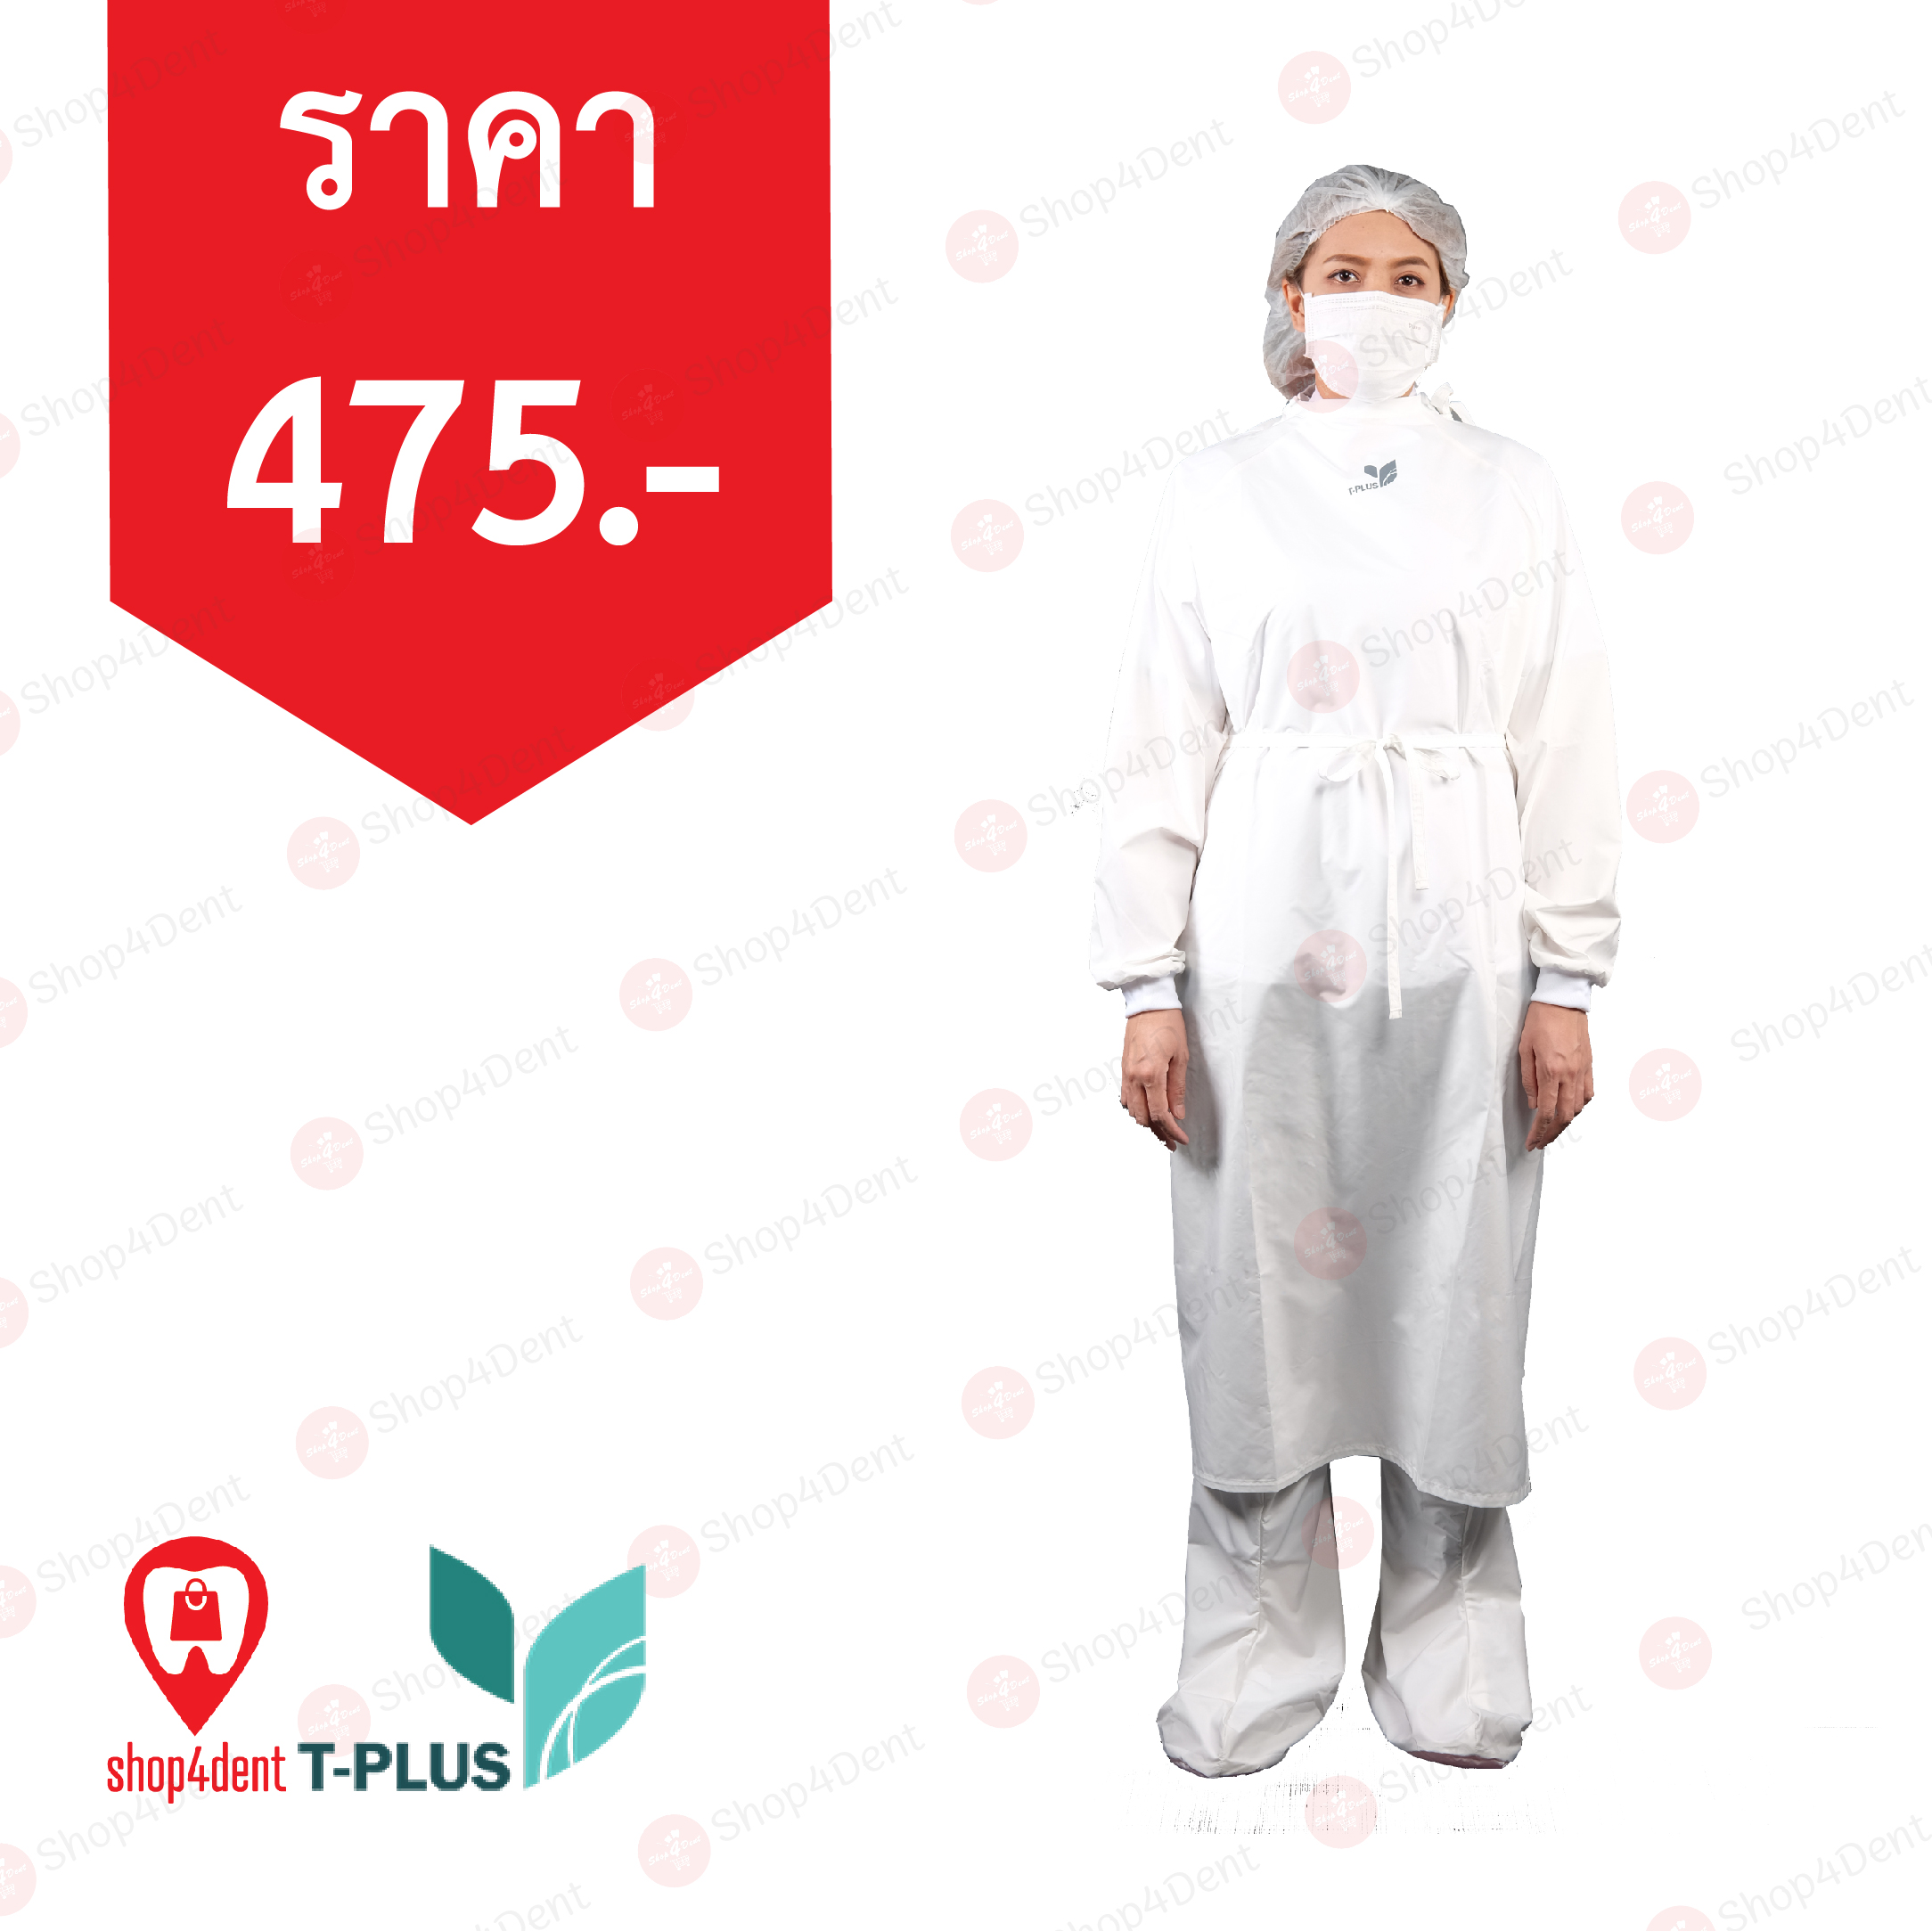 Tplus Medical PPE ชุดคลุมทางการแพทย์ป้องกันน้ำ Gown